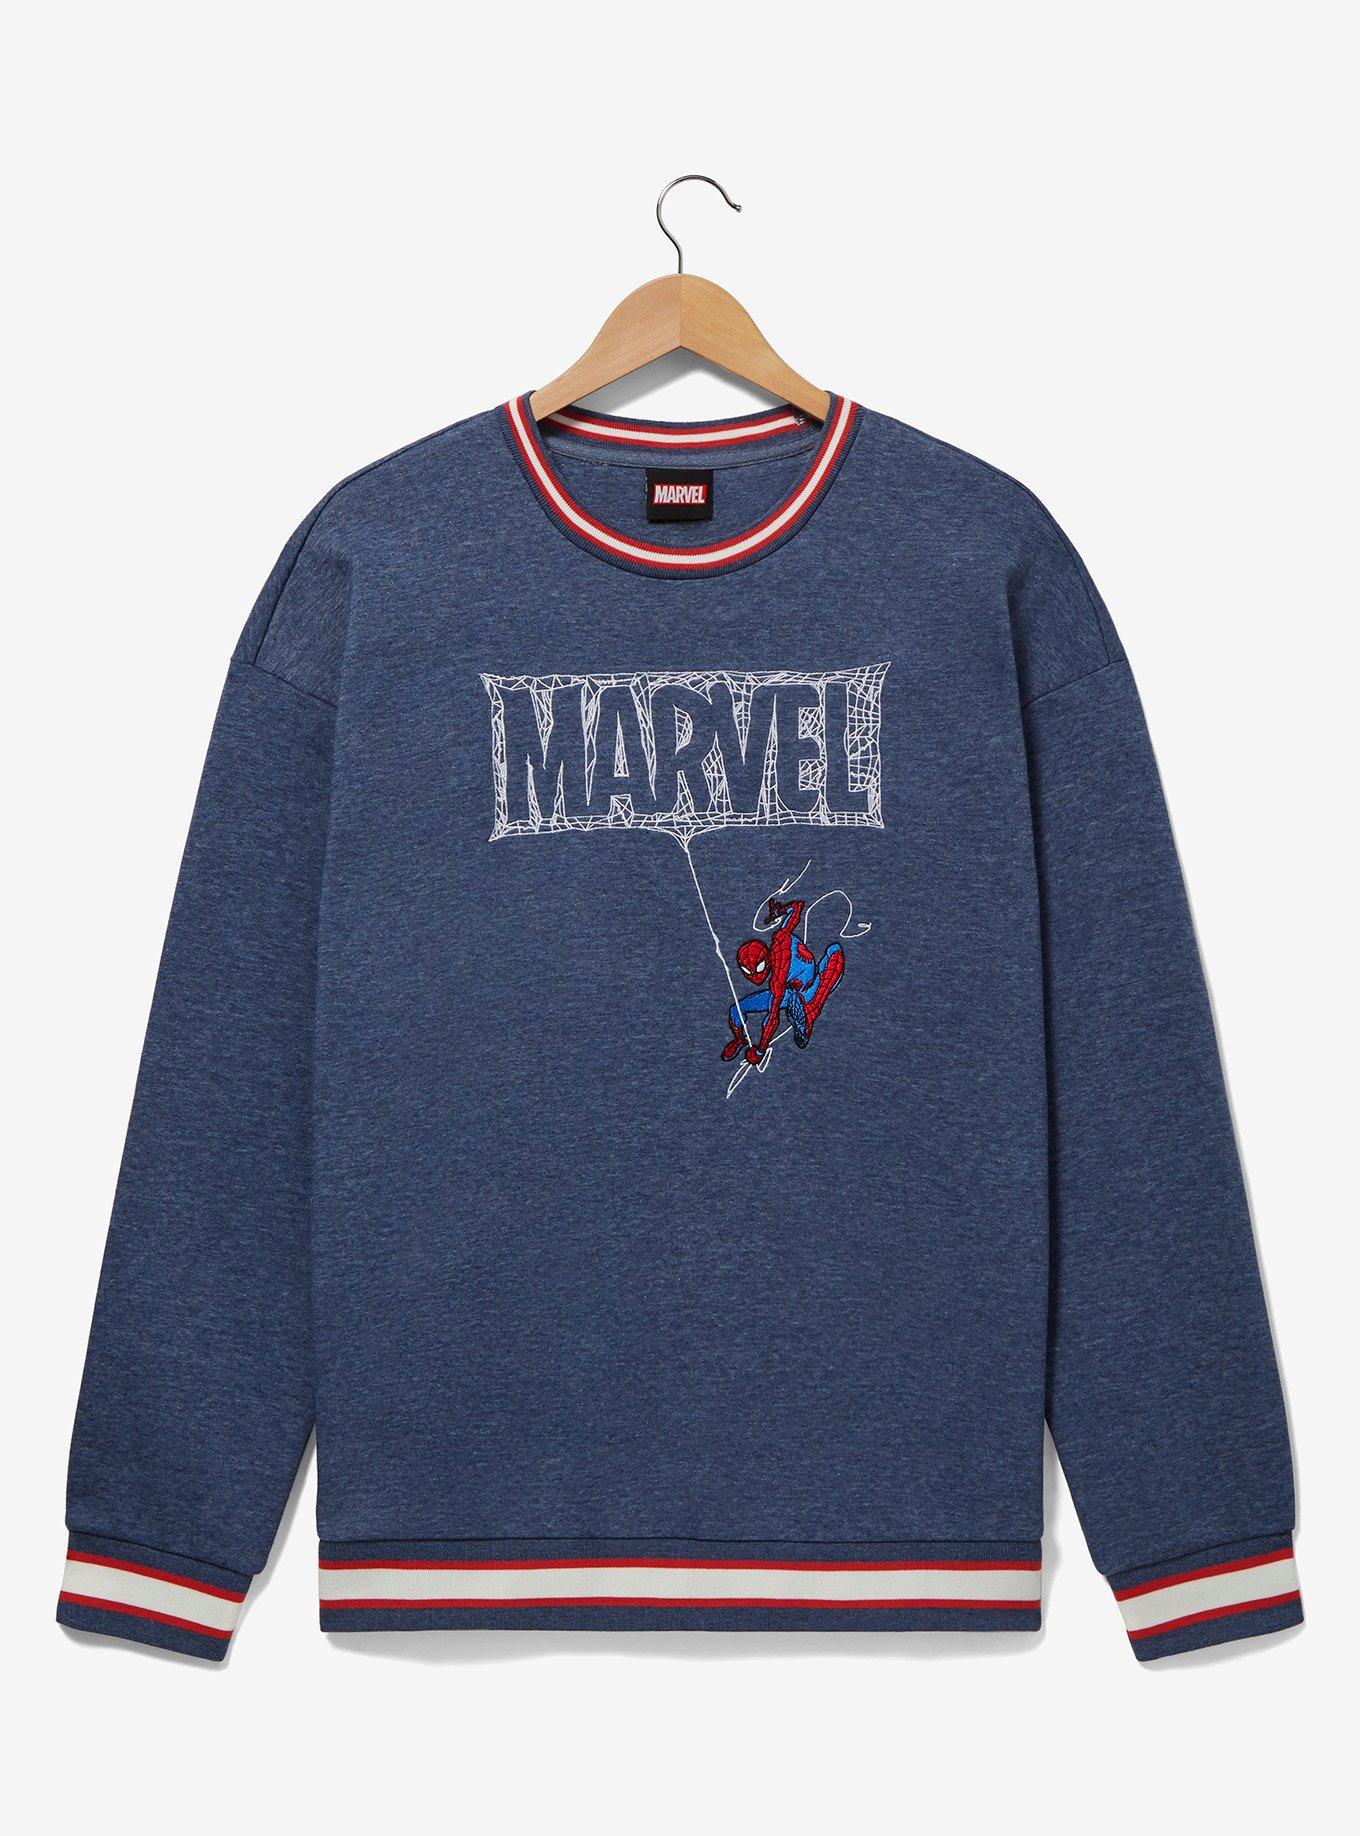 Marvel The Marvels Carol Danvers Hockey Jersey - BoxLunch